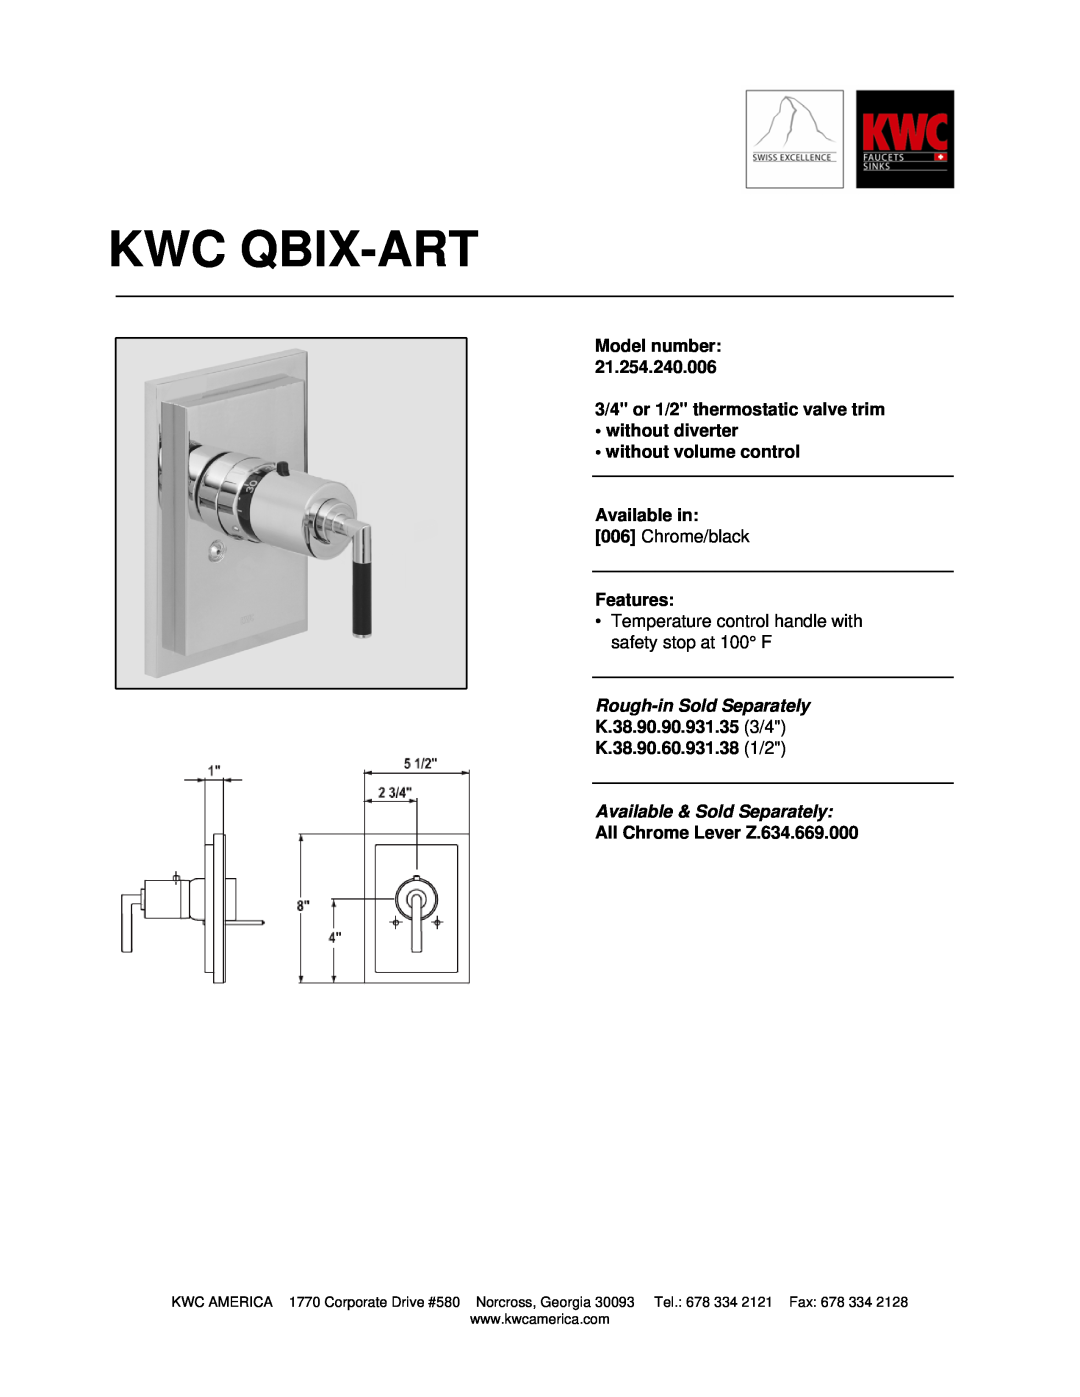 KWC QBIX-ART manual Kwc Qbix-Art, Model number 3/4 or 1/2 thermostatic valve trim, without diverter without volume control 